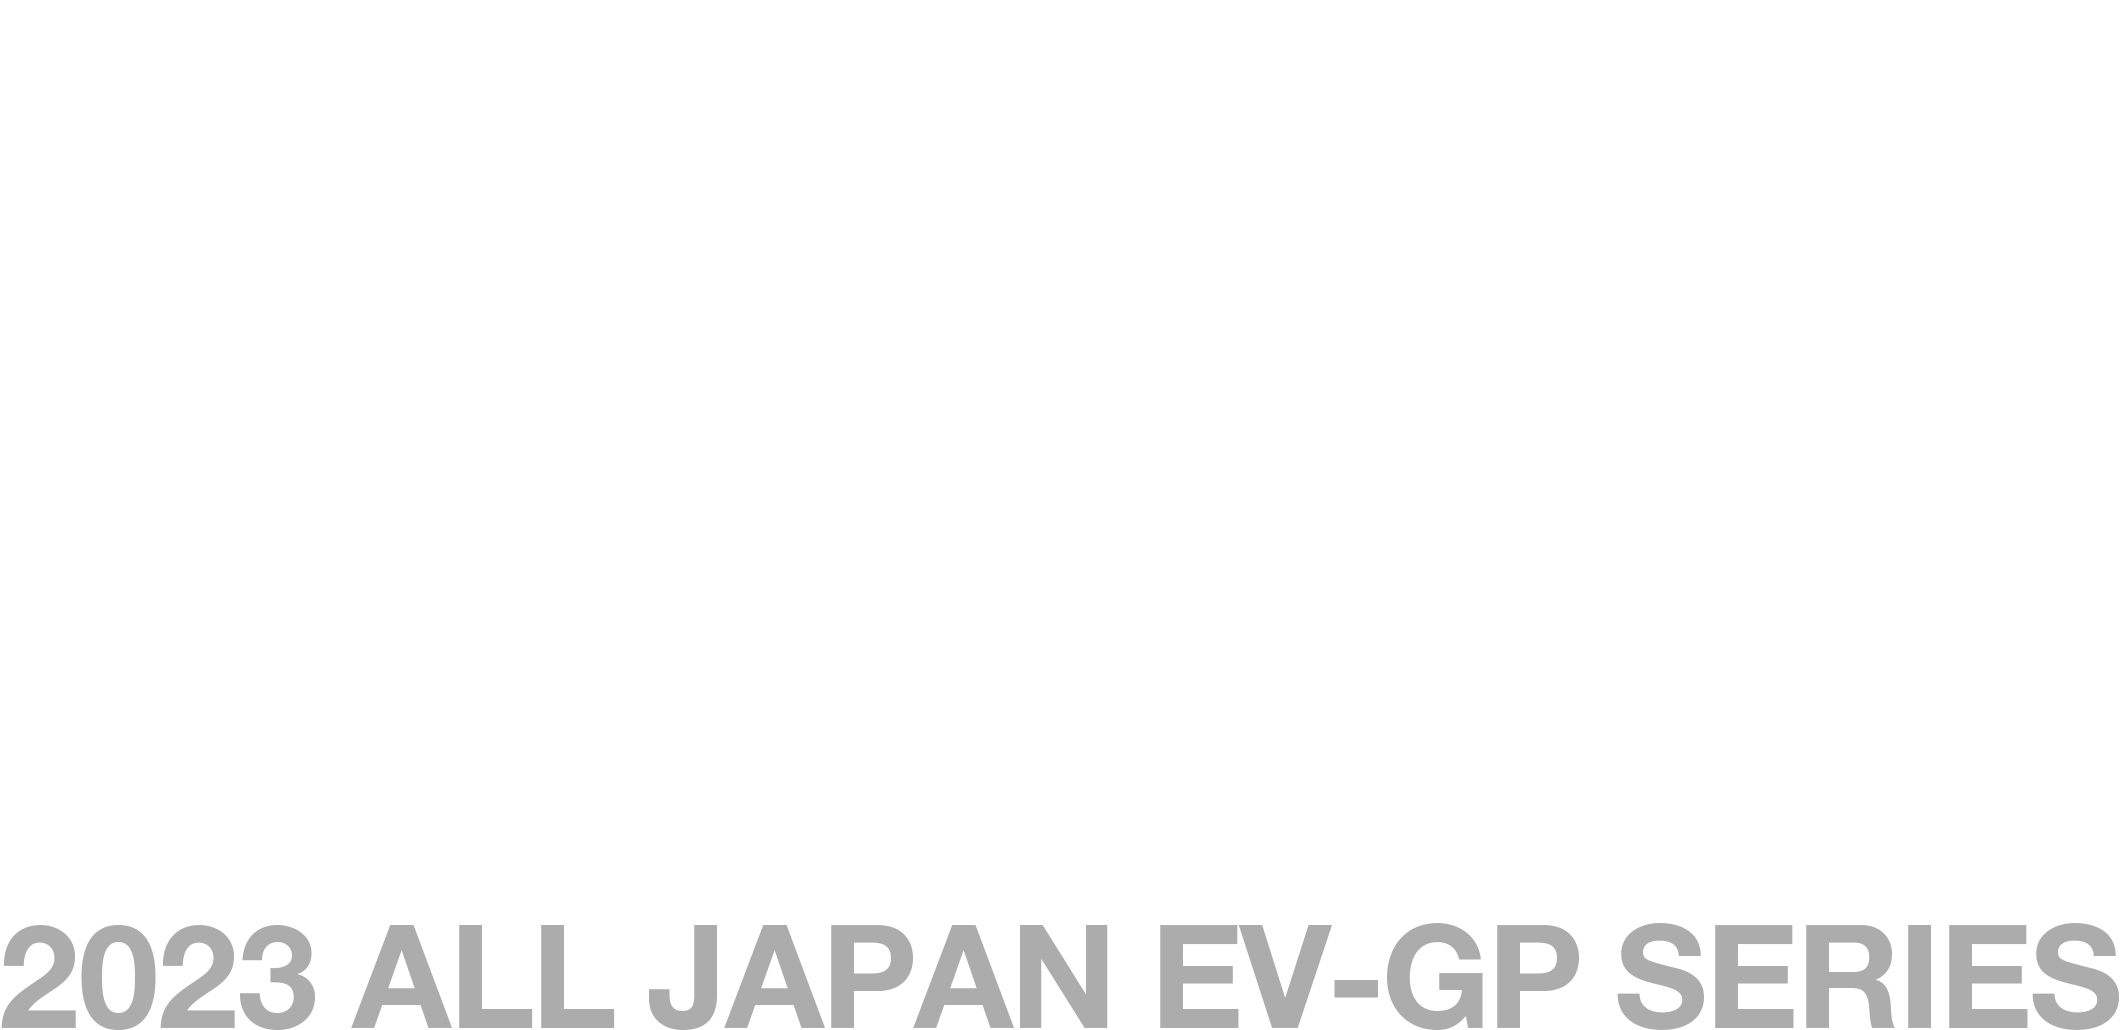 2023 ALL JAPAN EV-GP SERIES